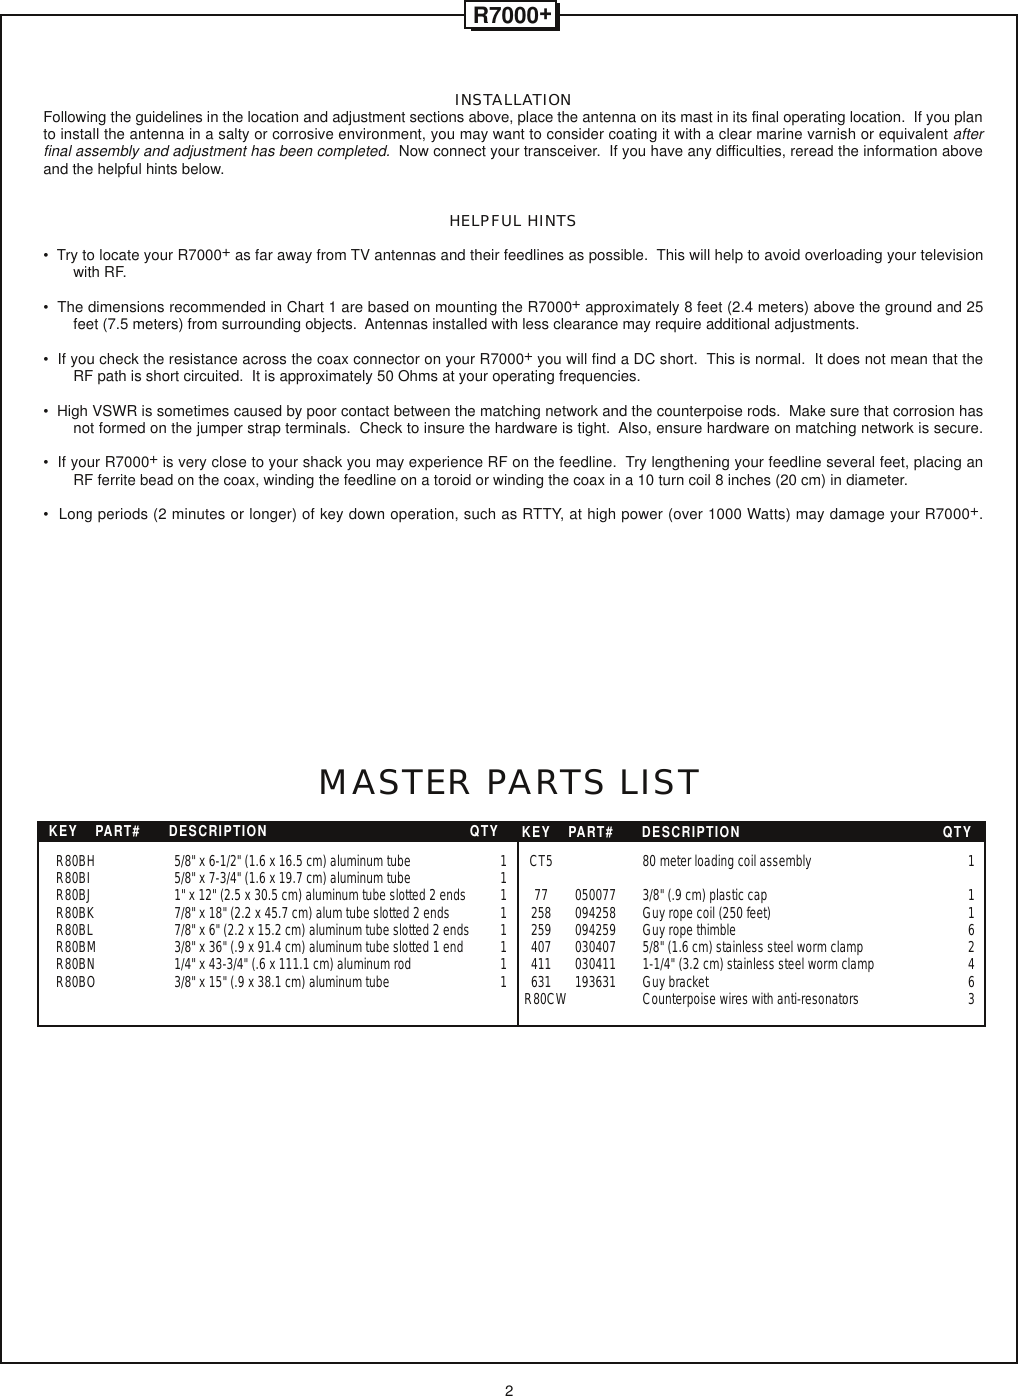 Page 3 of 8 - CUSHCRAFT--R-7000+INSTALLATION CUSHCRAFT--R-7000 INSTALLATION